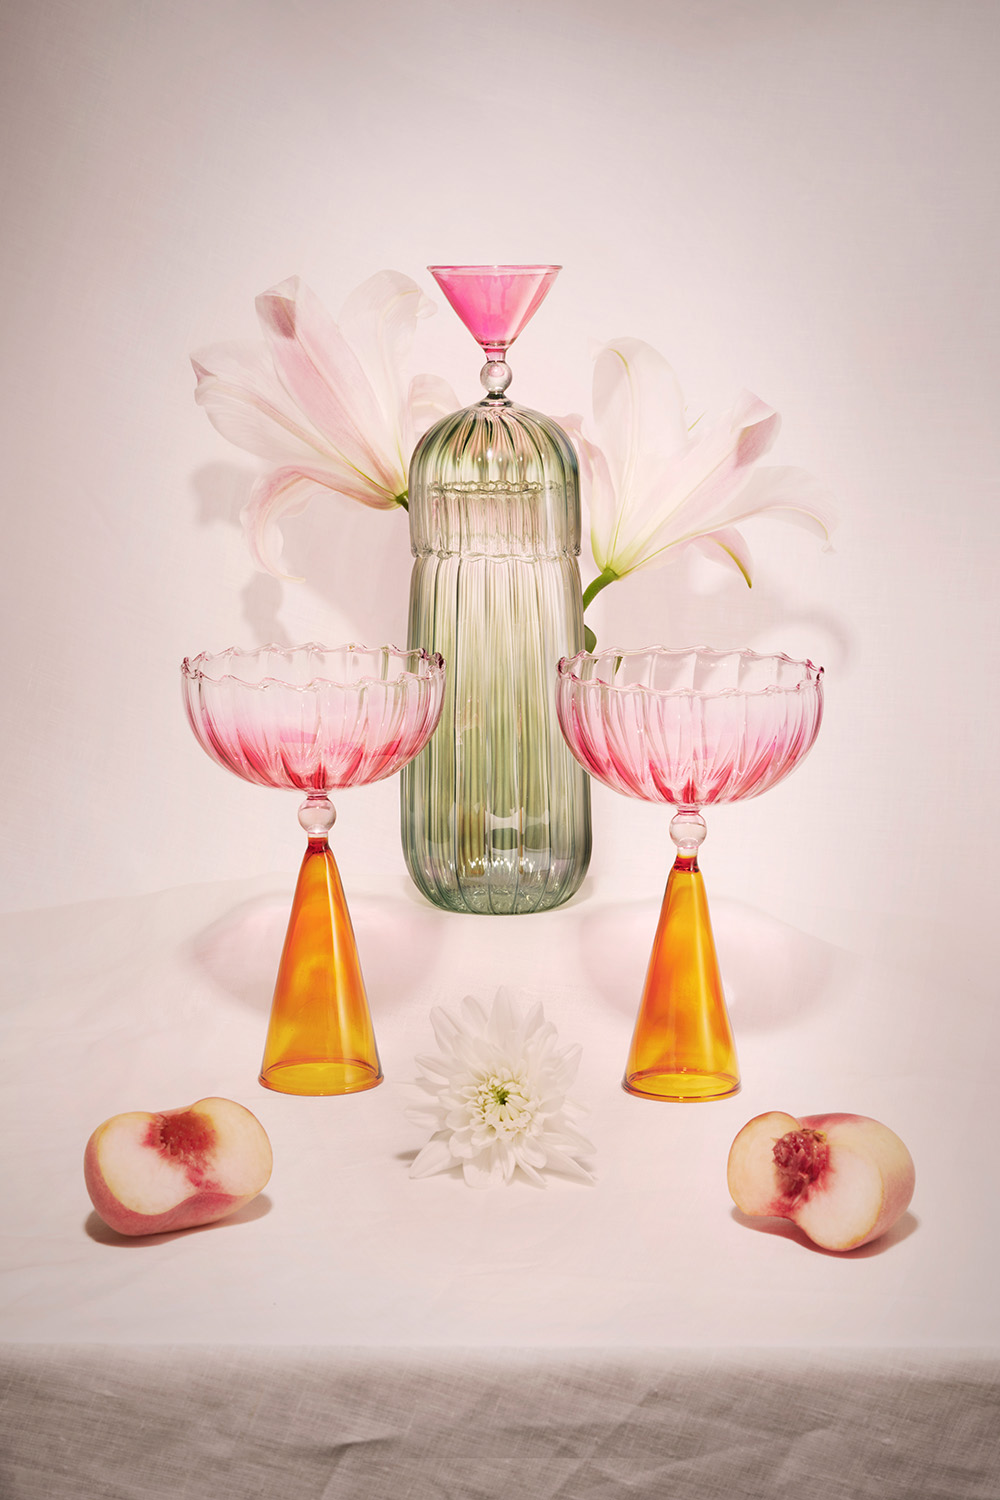 calypso-serena-confalonieri-glasses-design-glass-bottle